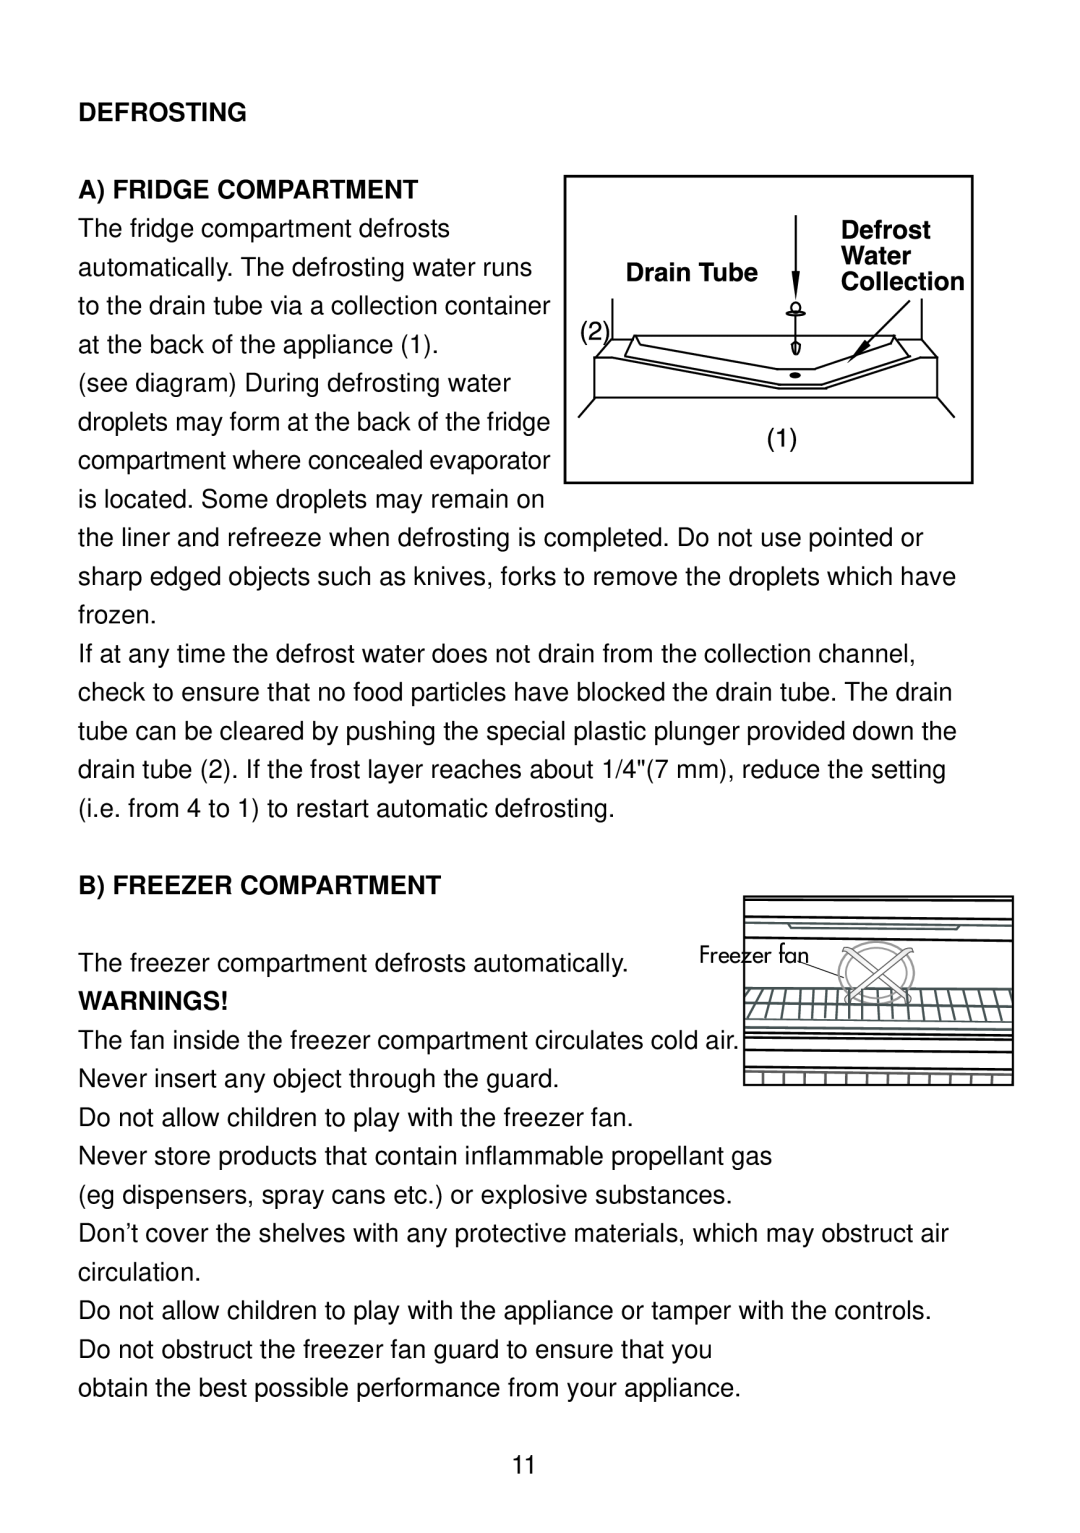 Glen Dimplex Home Appliances Ltd IFF5050FF manual Defrosting A Fridge Compartment, B Freezer Compartment, Warnings 